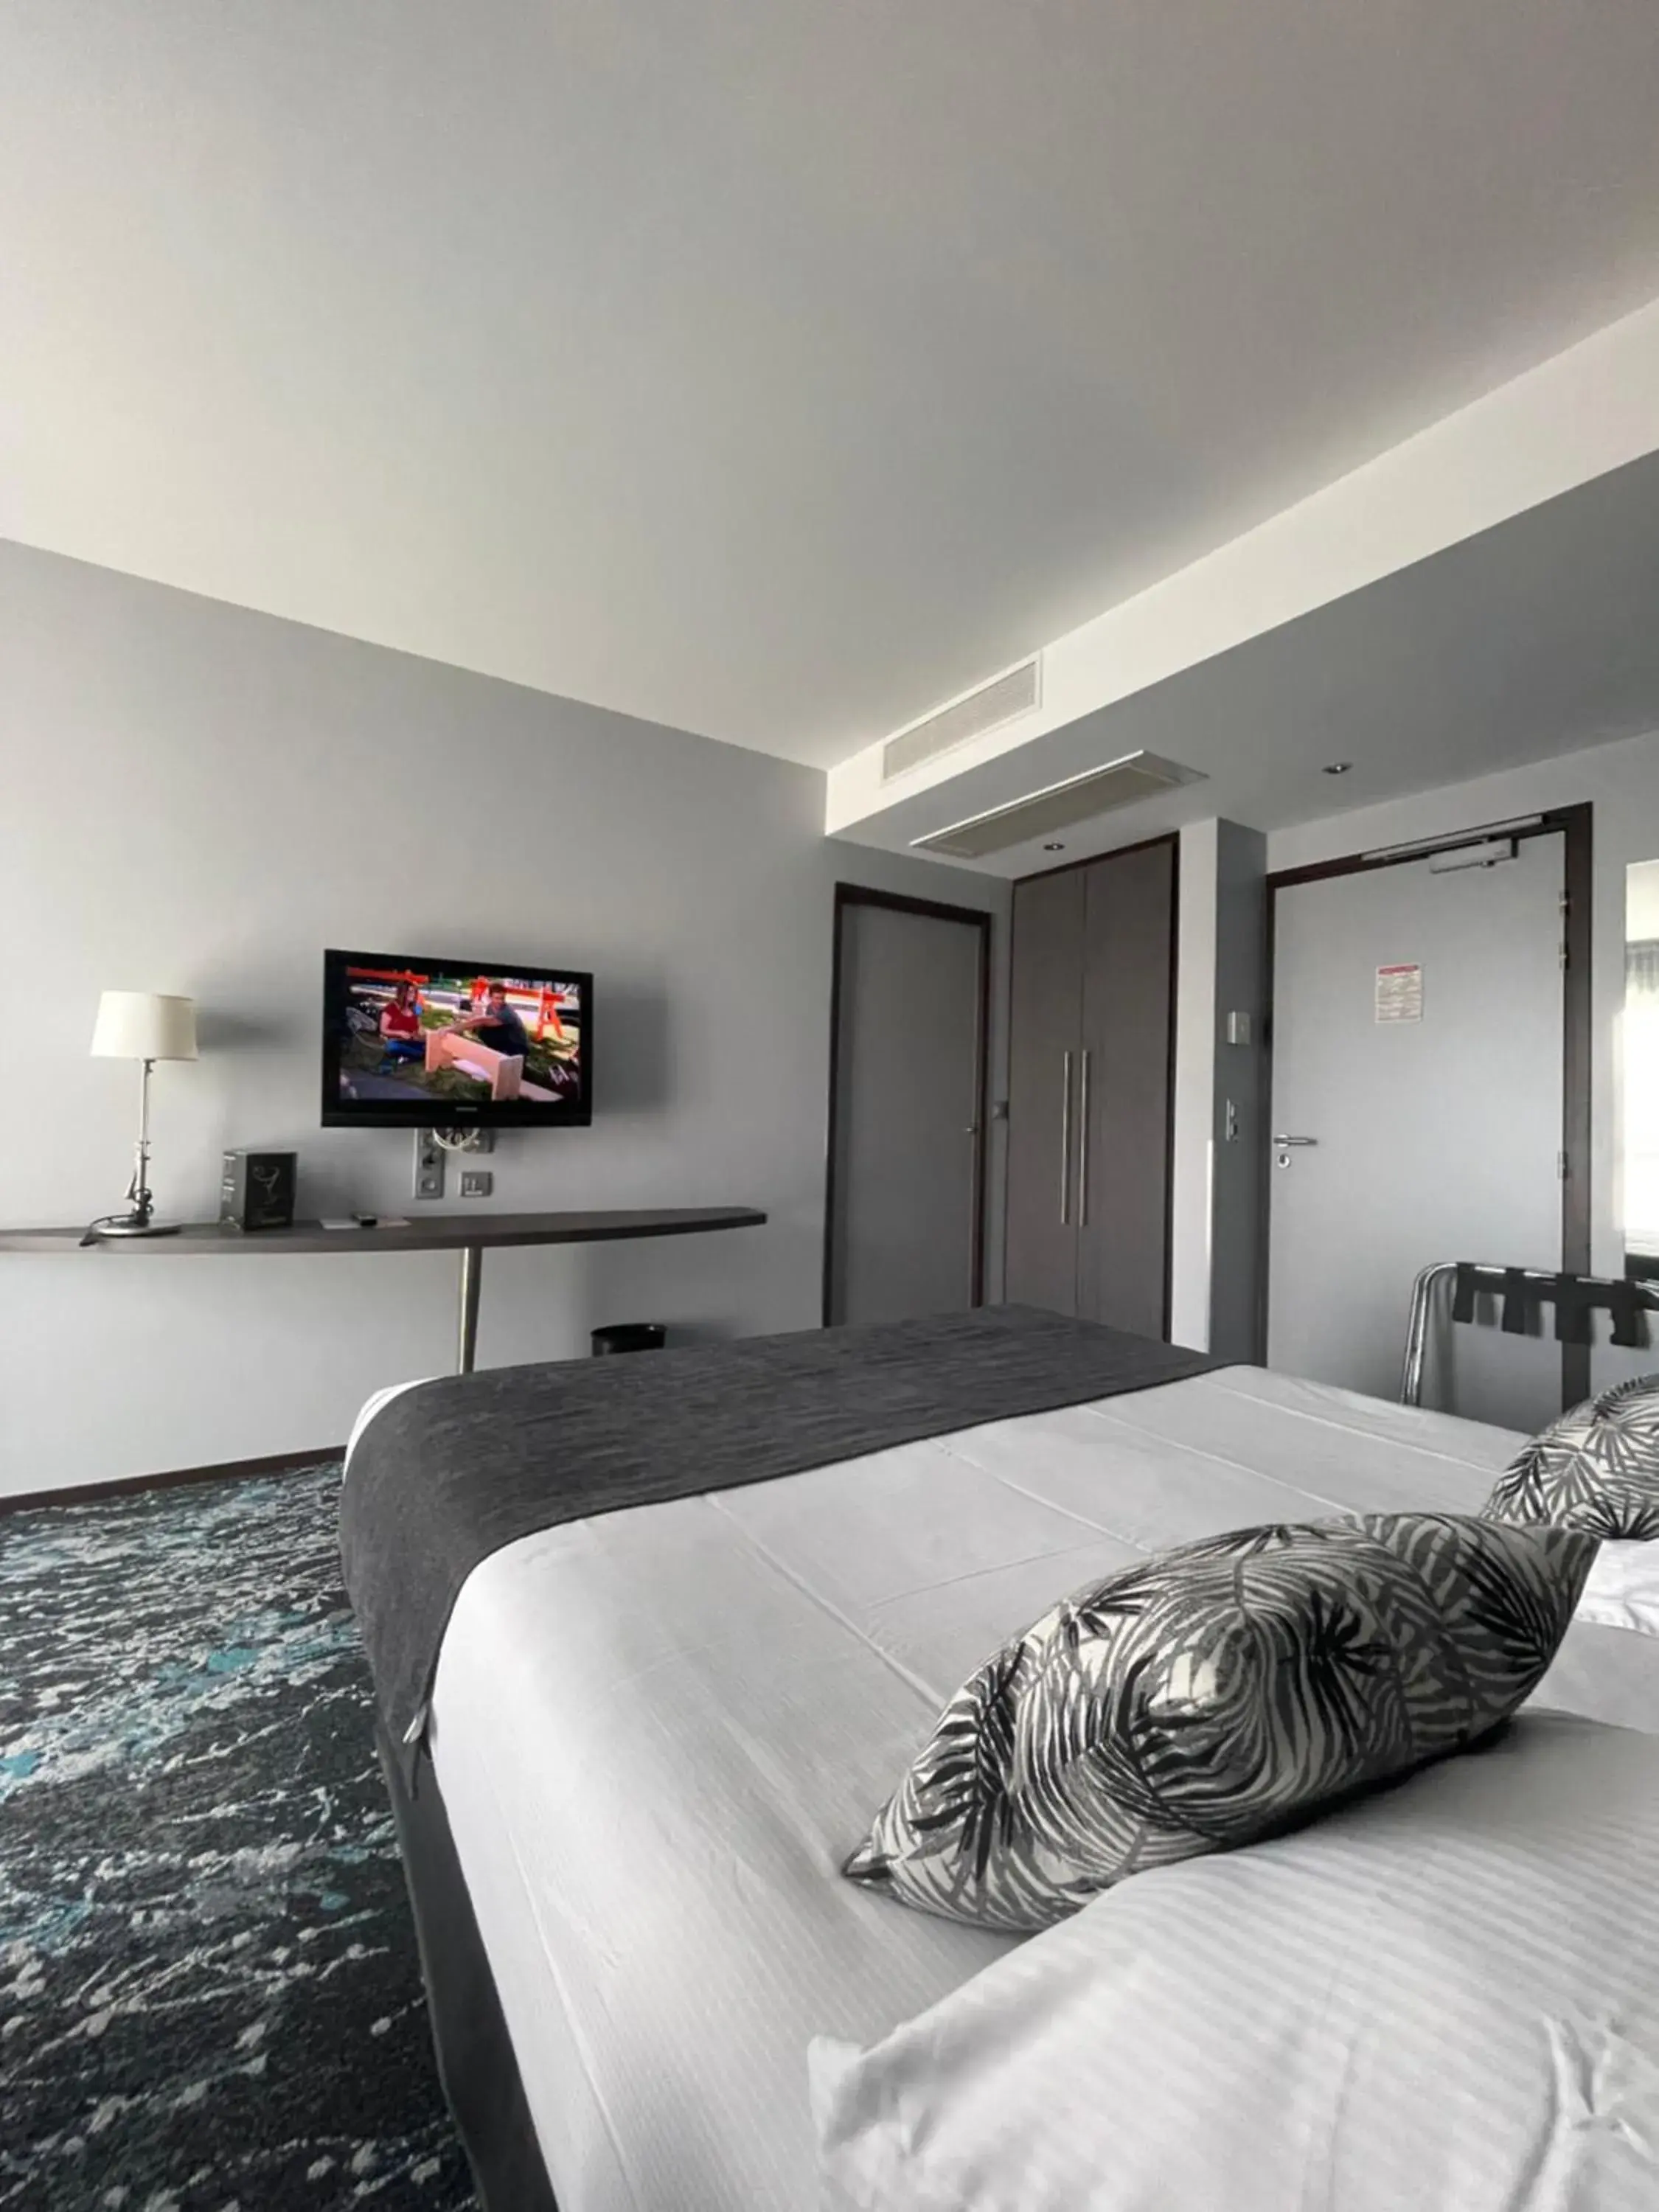 Bed in Hotel Victor Hugo & Spa